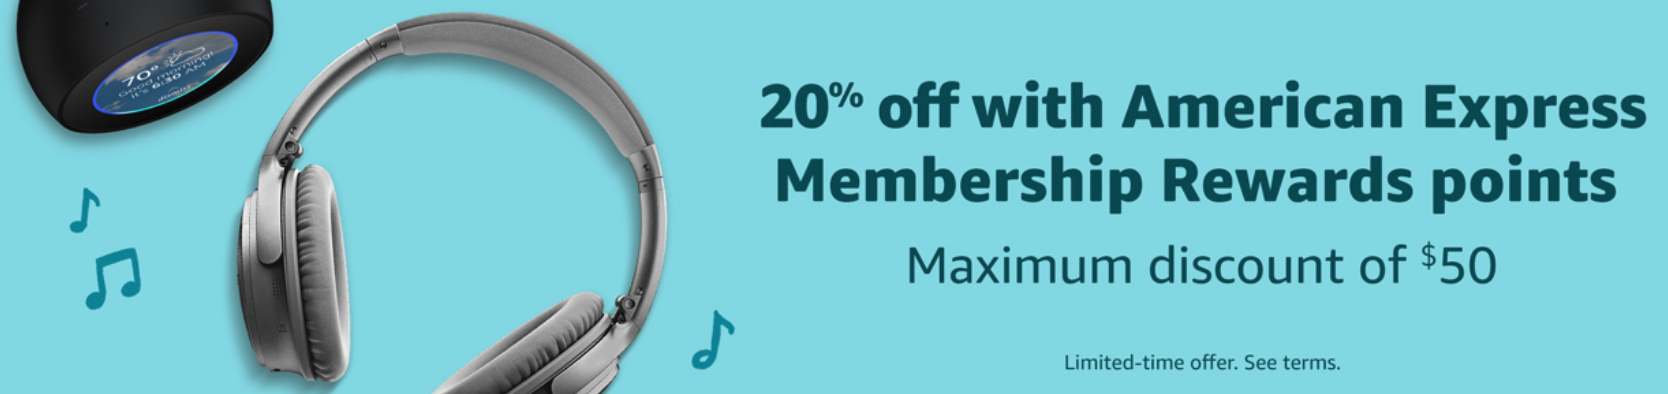 save 20% at Amazon by using American Express Membership Rewards Points.